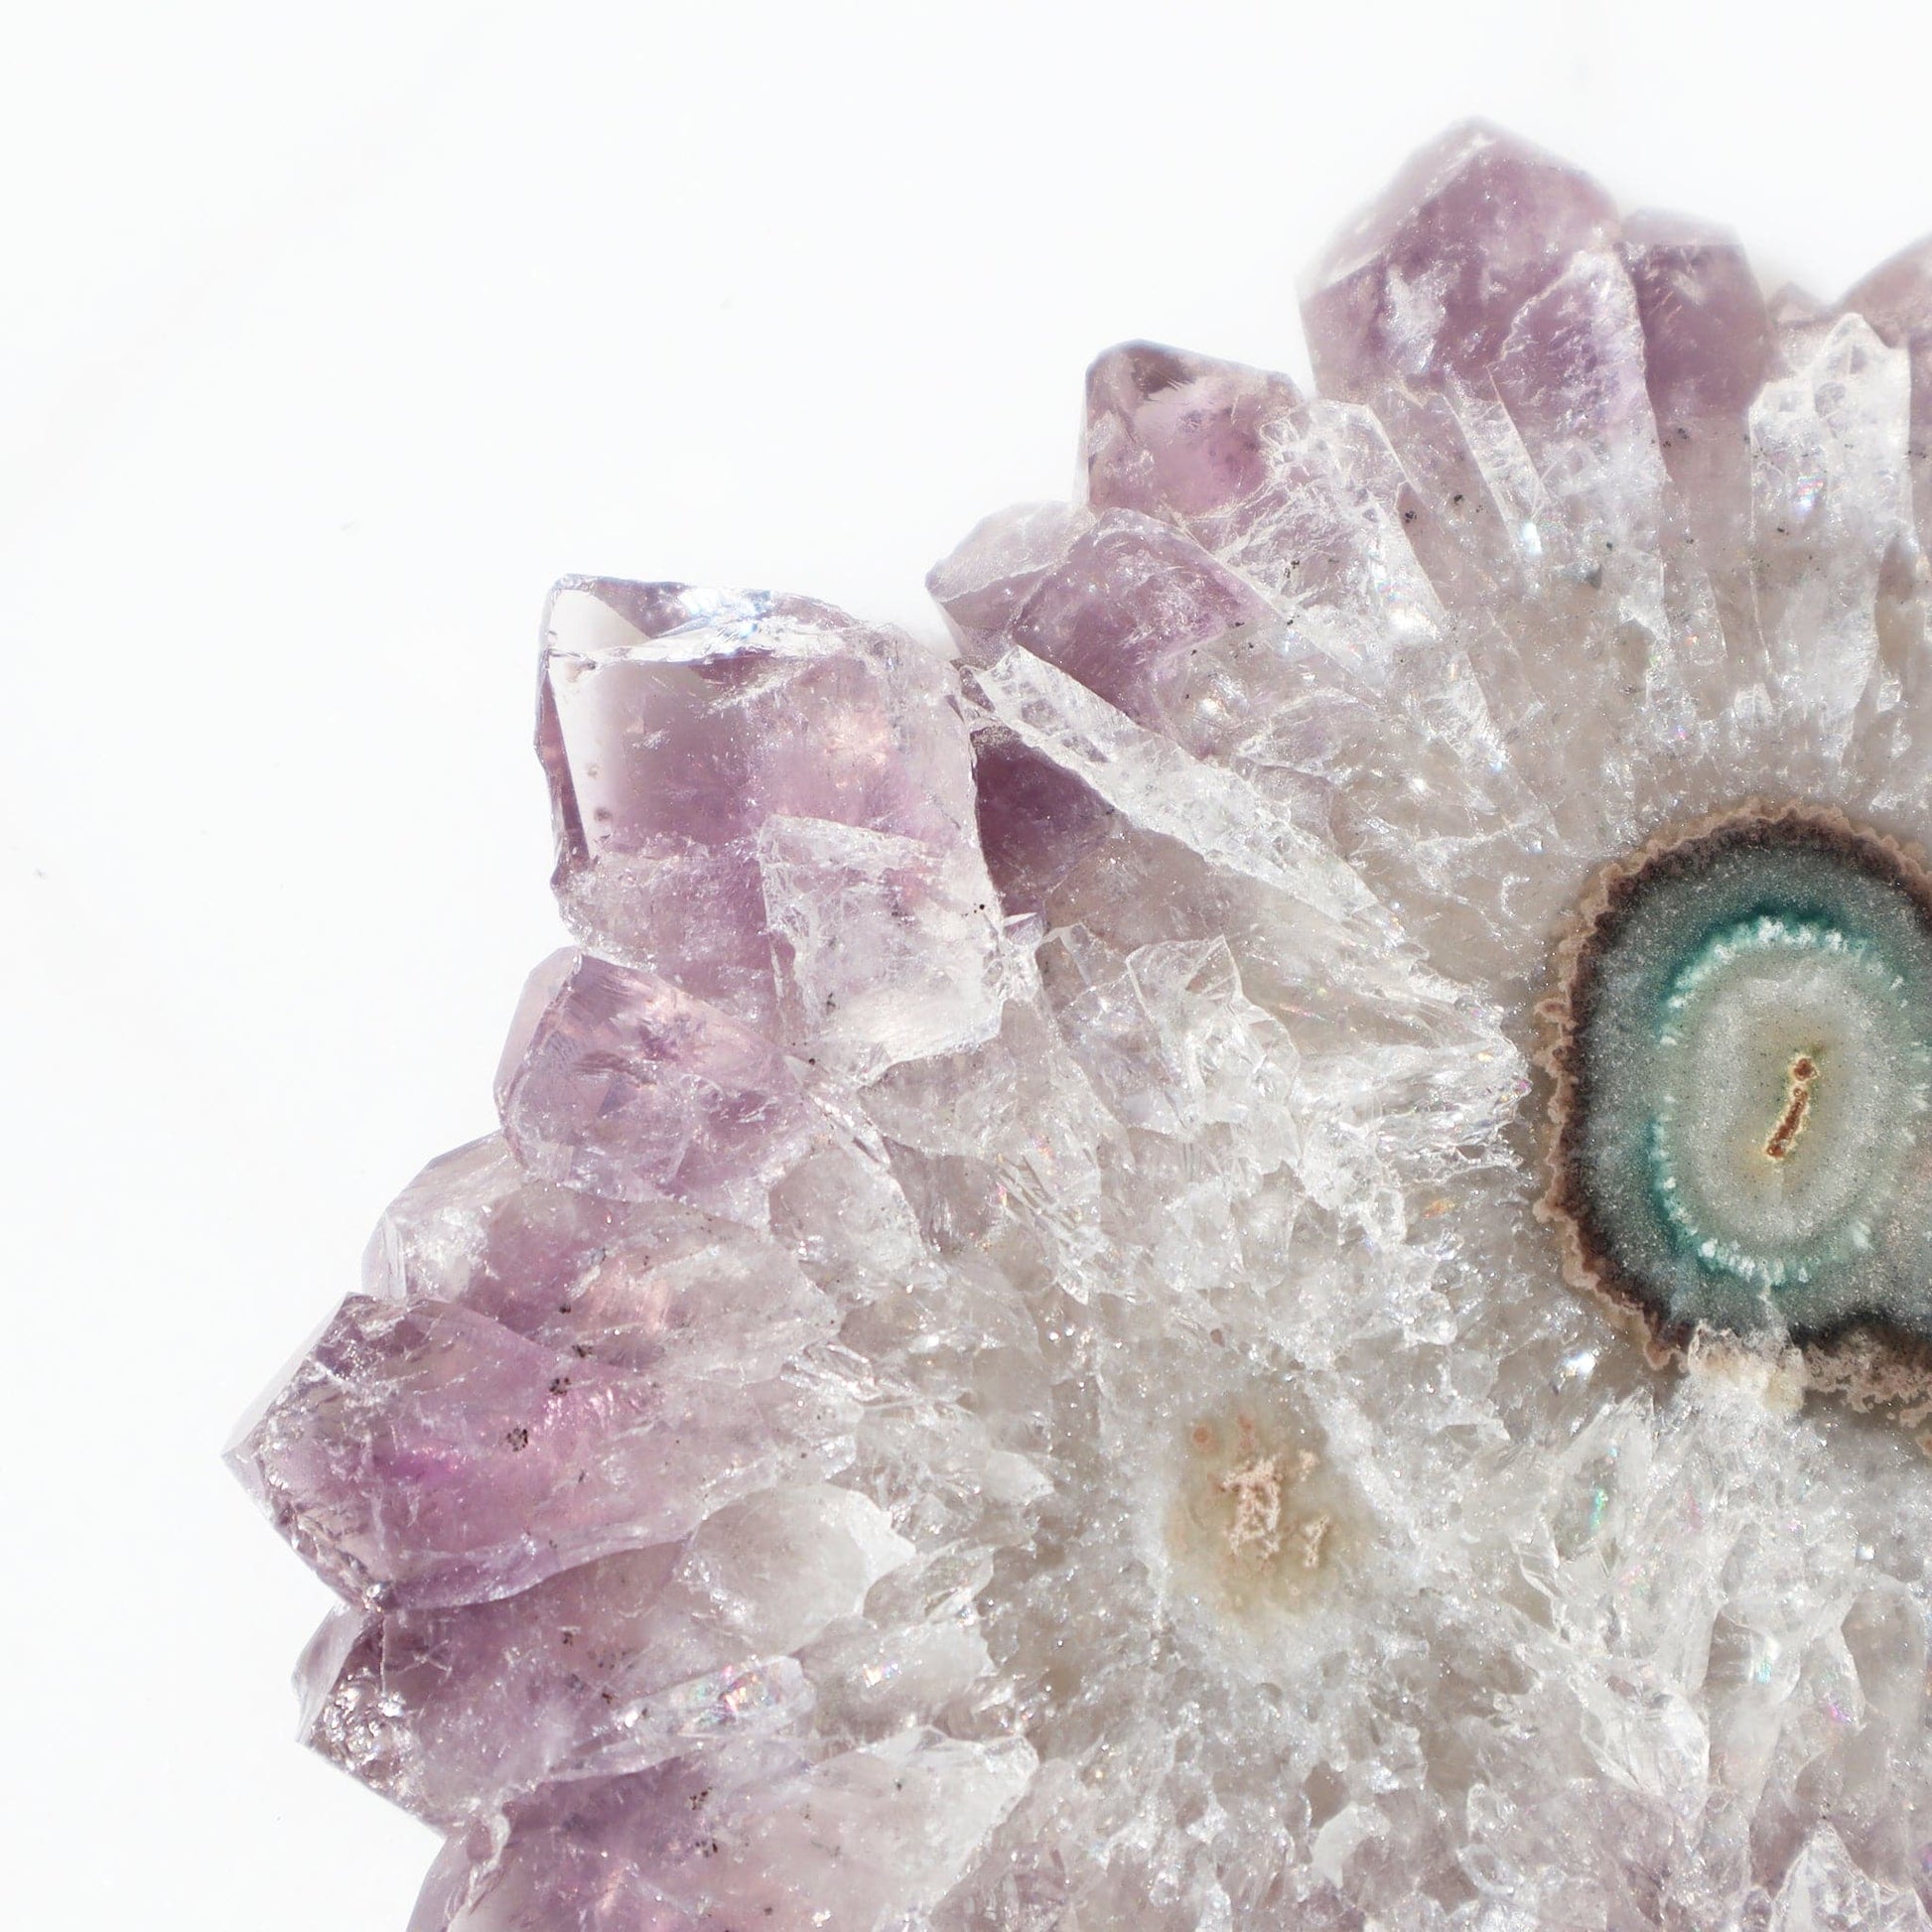 Amethyst Stalactite Slice Crystals Flower